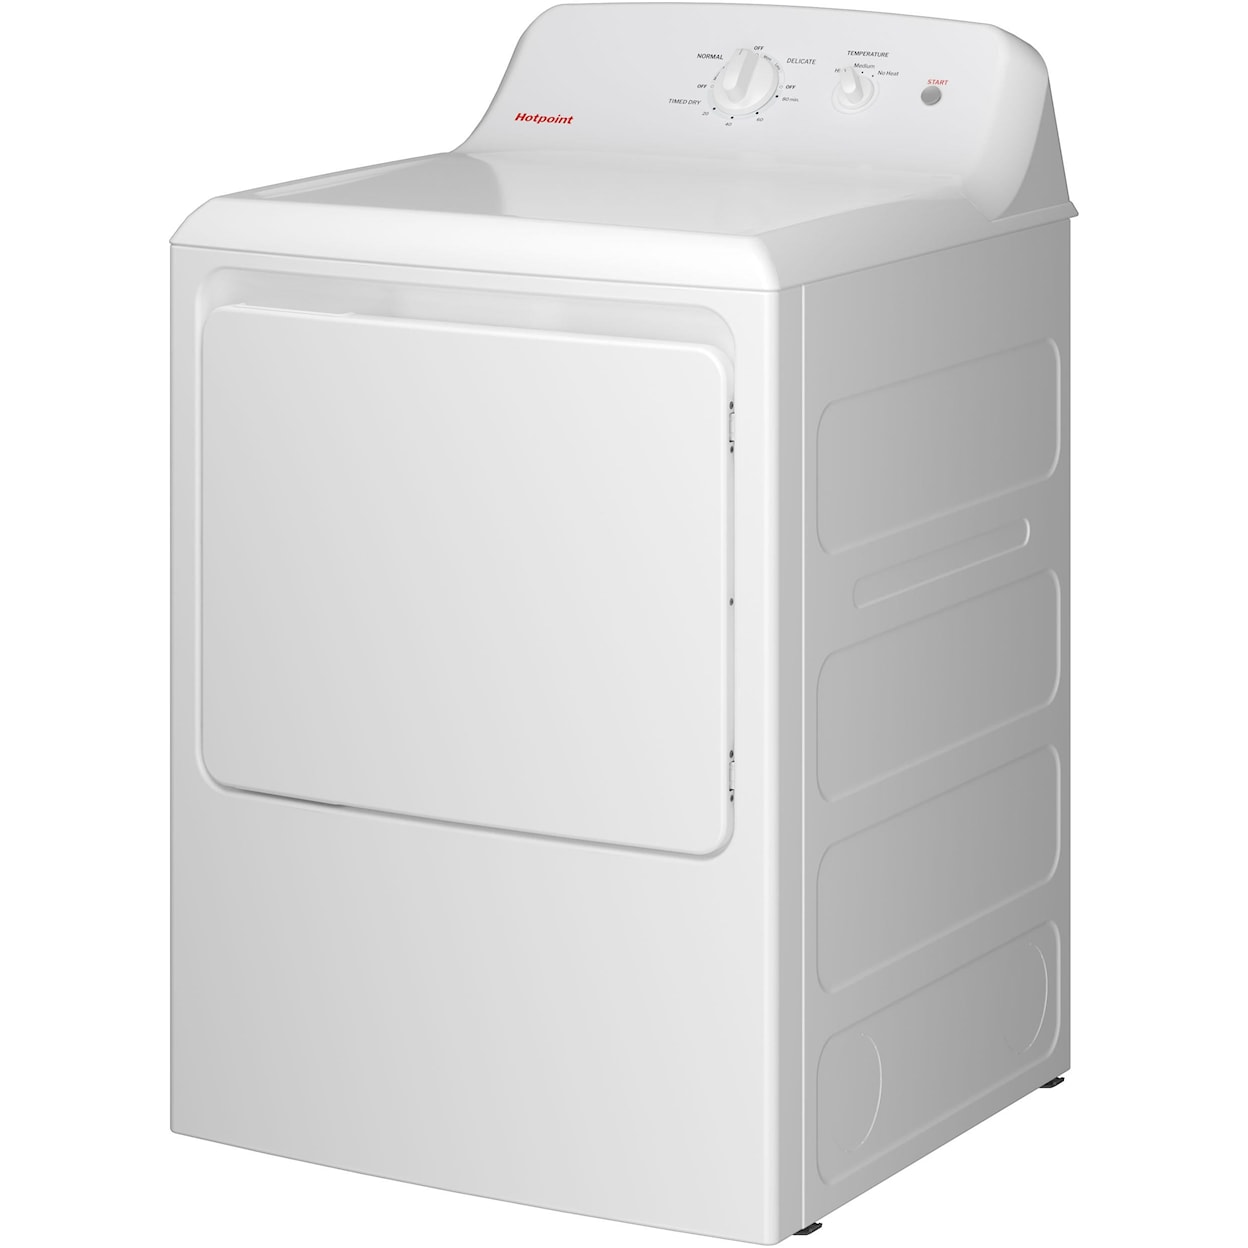 Hotpoint Laundry Dryer